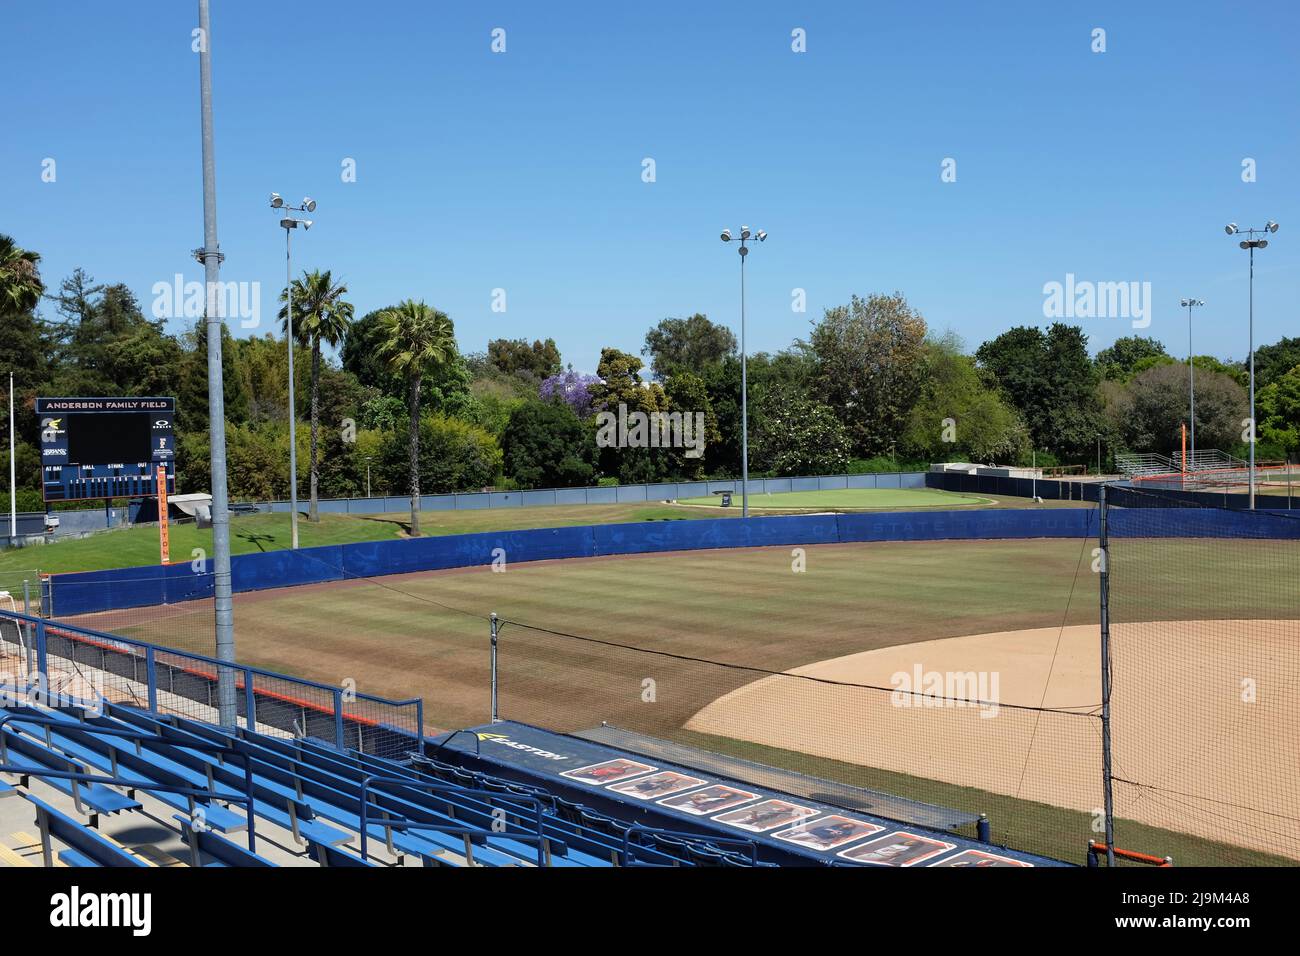 FULLERTON CALIFORNIA - 22. MAI 2020: Das Anderson Family Field Heim der California State University Fullerton Titans Damen Softball-Mannschaft. Stockfoto